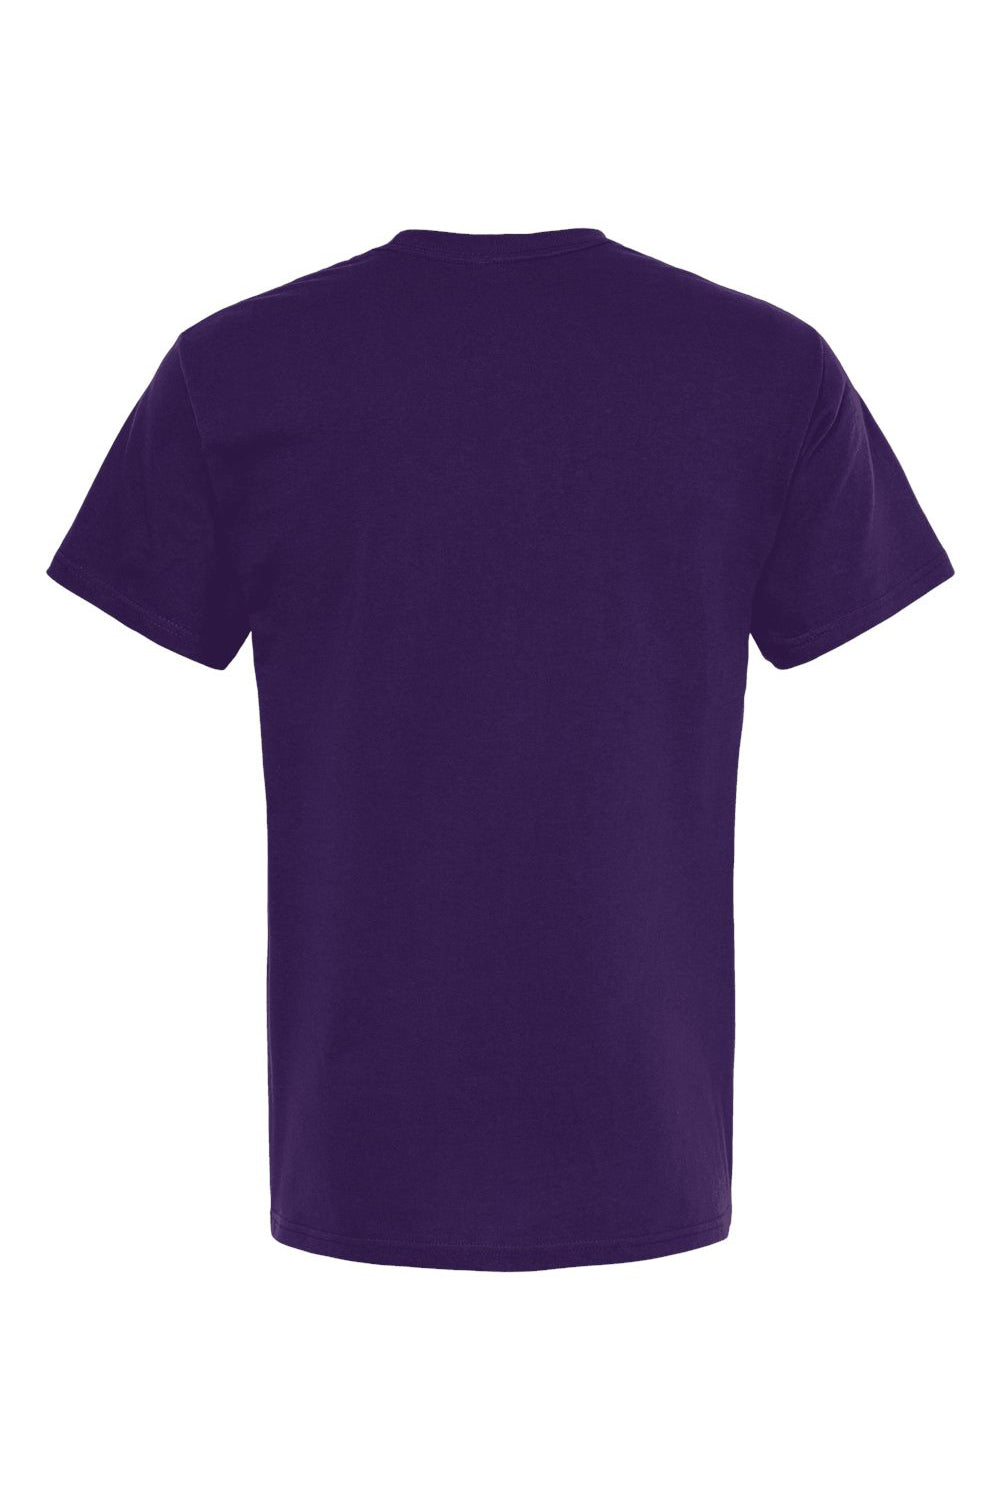 M&O 4800 Mens Gold Soft Touch Short Sleeve Crewneck T-Shirt Purple Flat Back